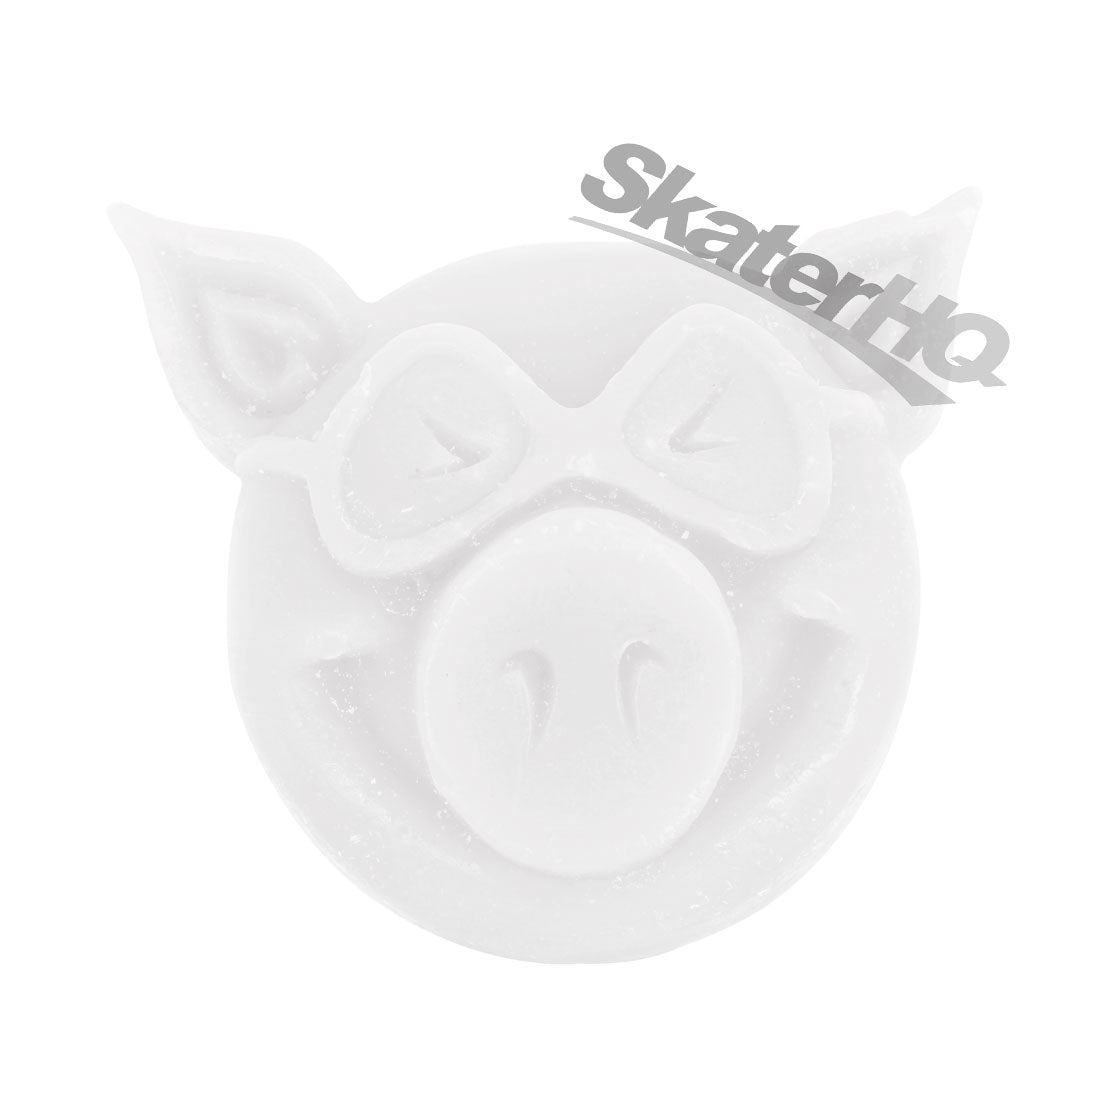 PIG 3D Wax - White Skateboard Accessories